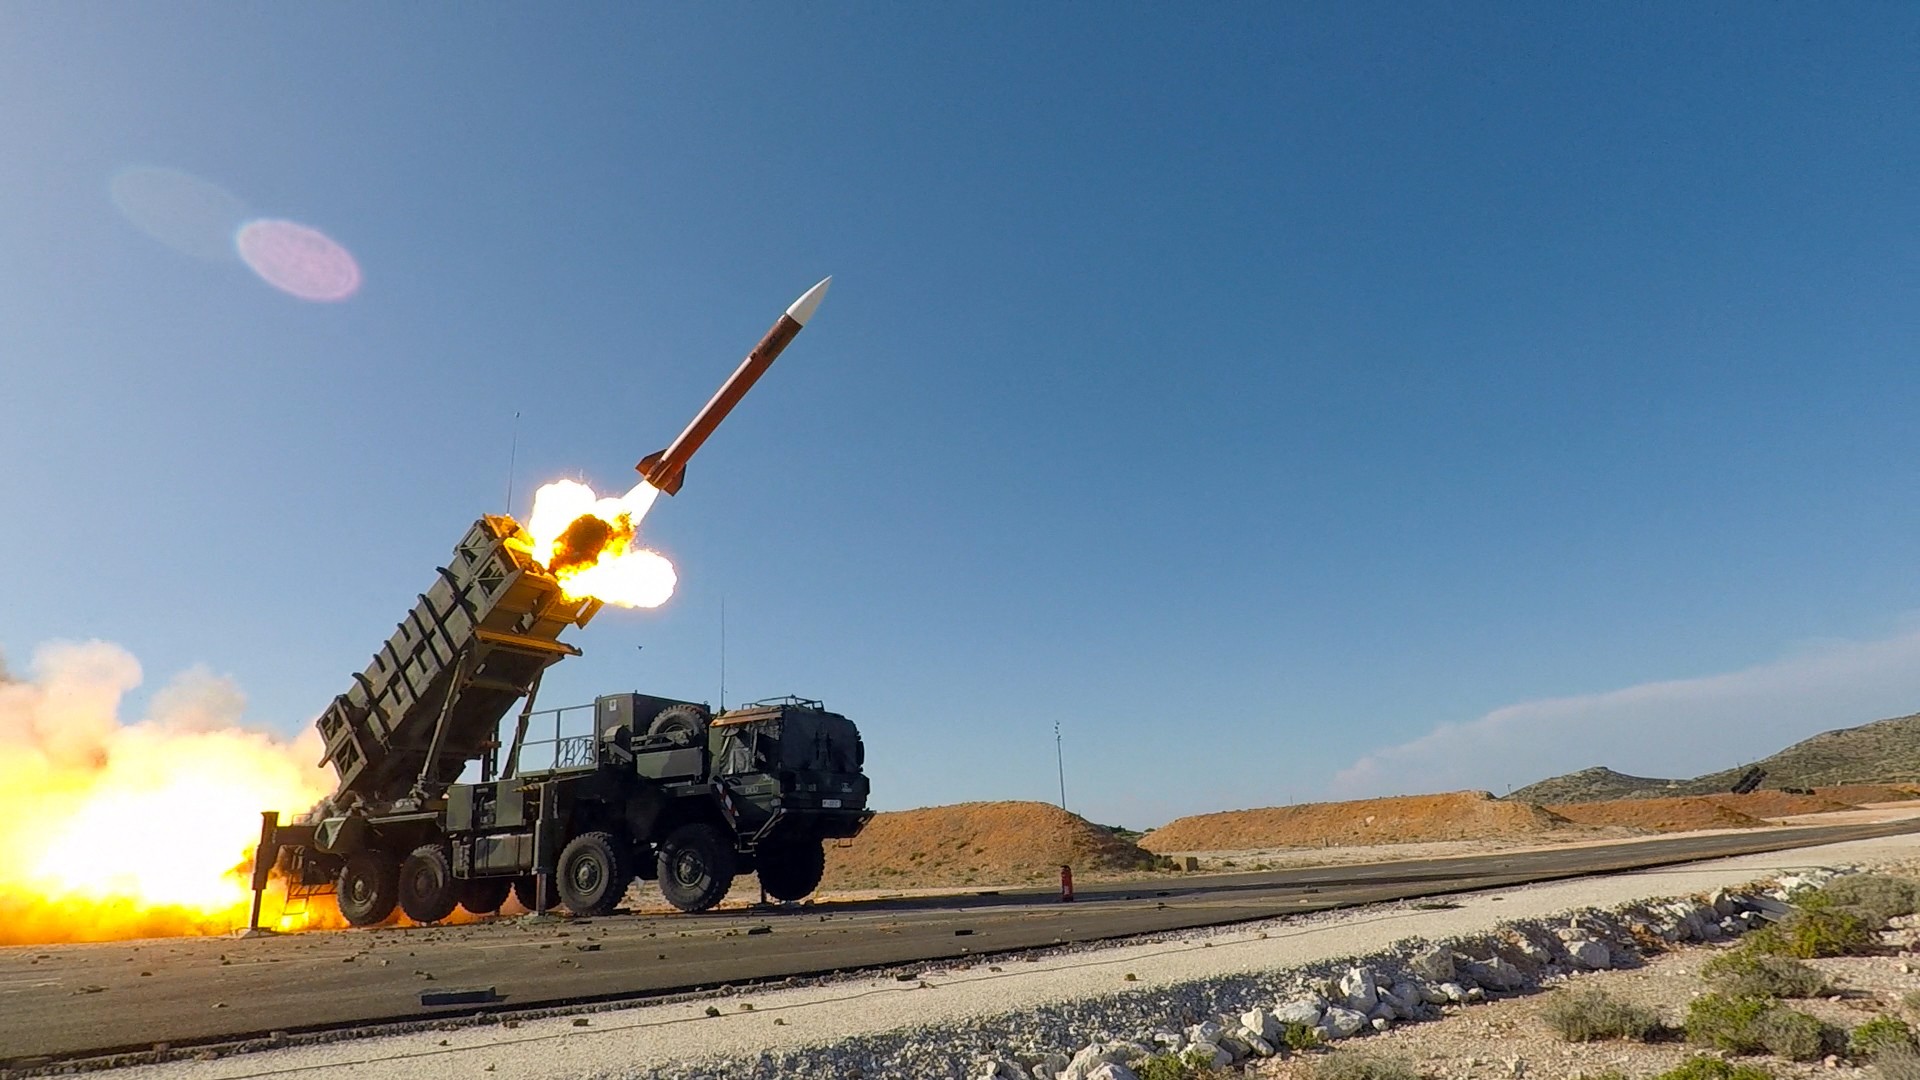 Guerra – Il Nyt rivela: “Missile sul mercato? Era ucraino”